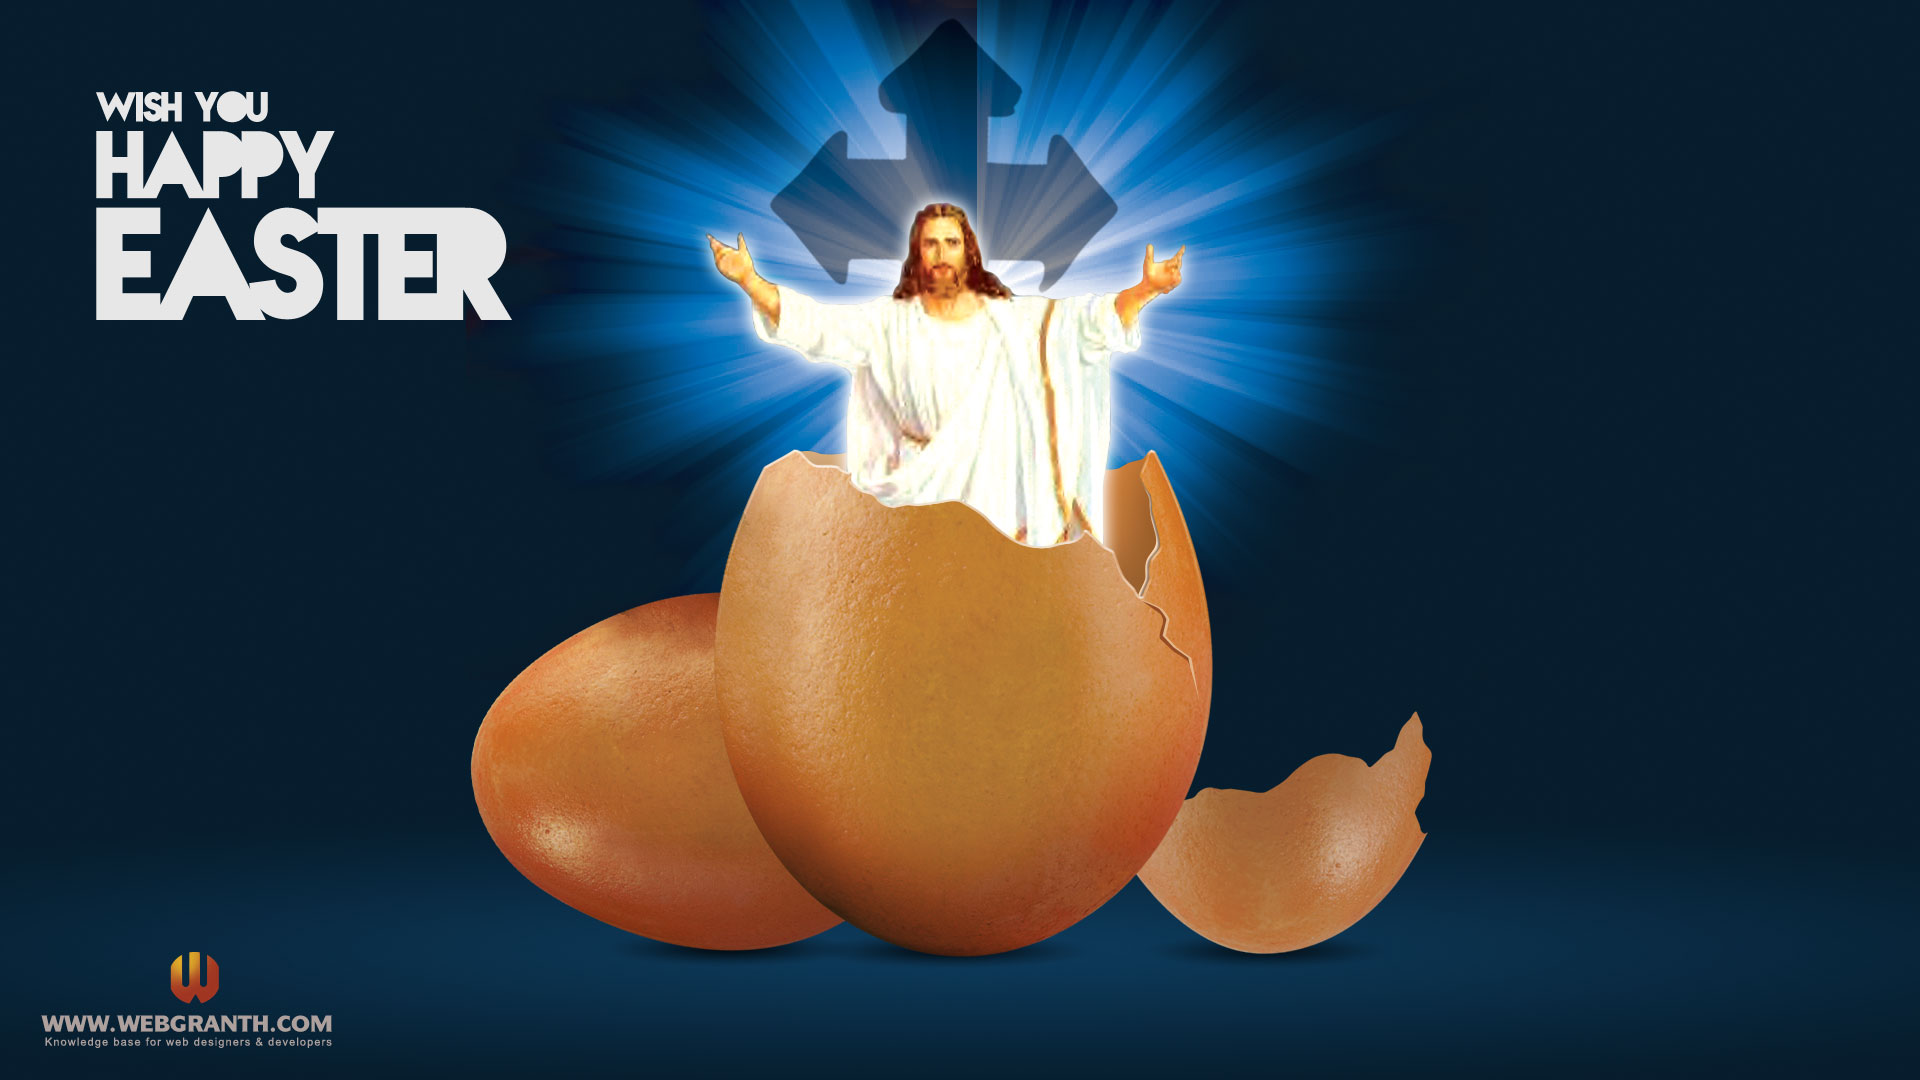 Jesus Easter Wallpaper Download Free 1 View HD Image of Jesus